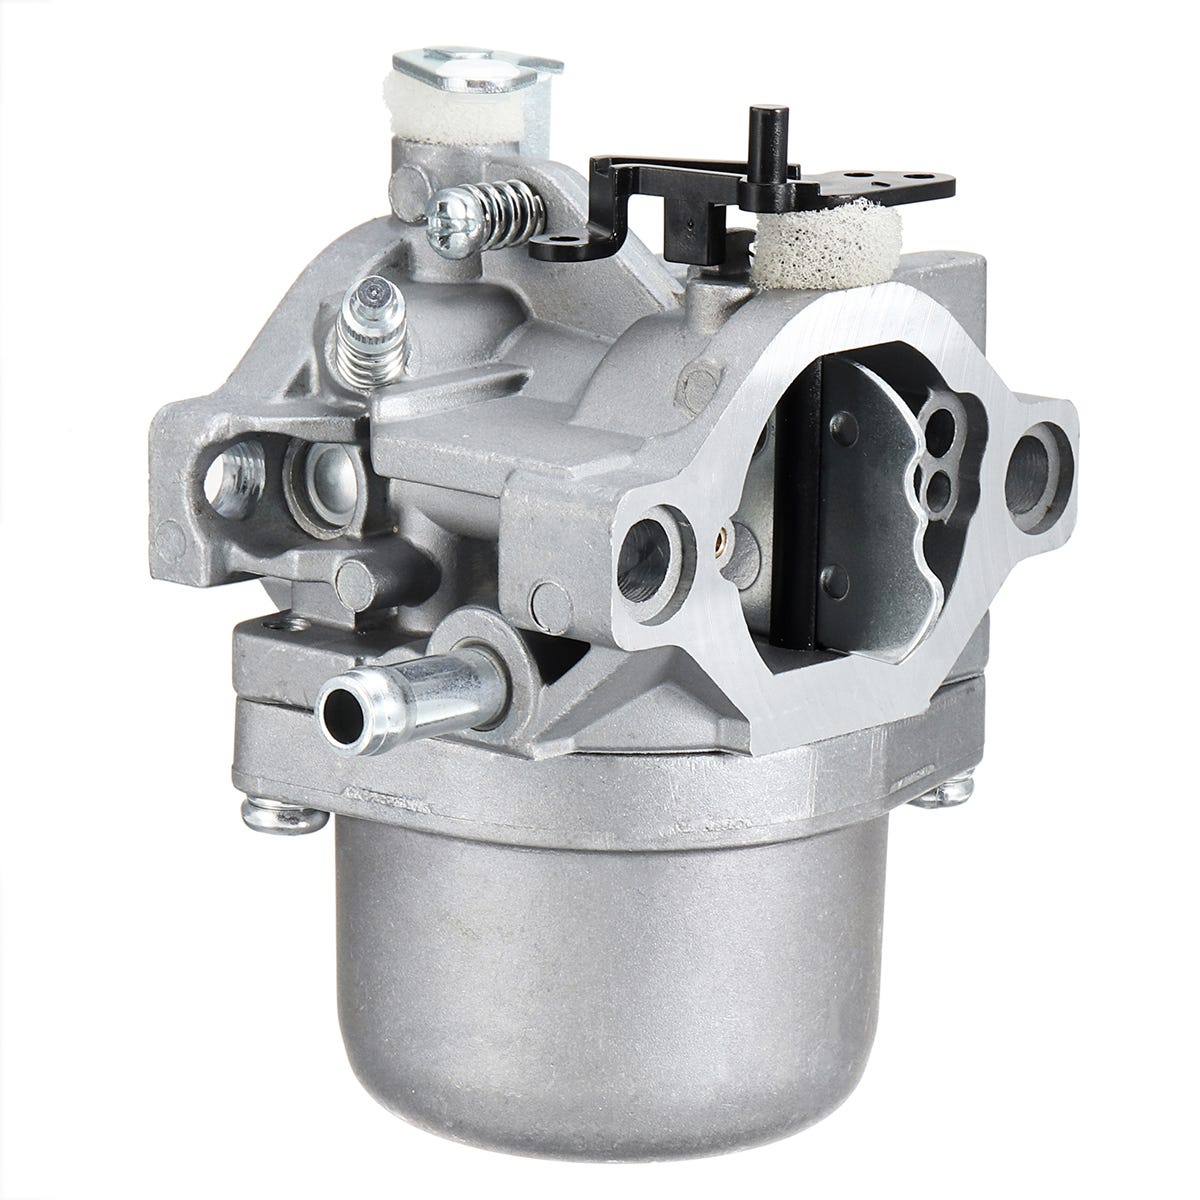 Carburateur automatique compatible Briggs & Stratton Walbro LMT 5-4